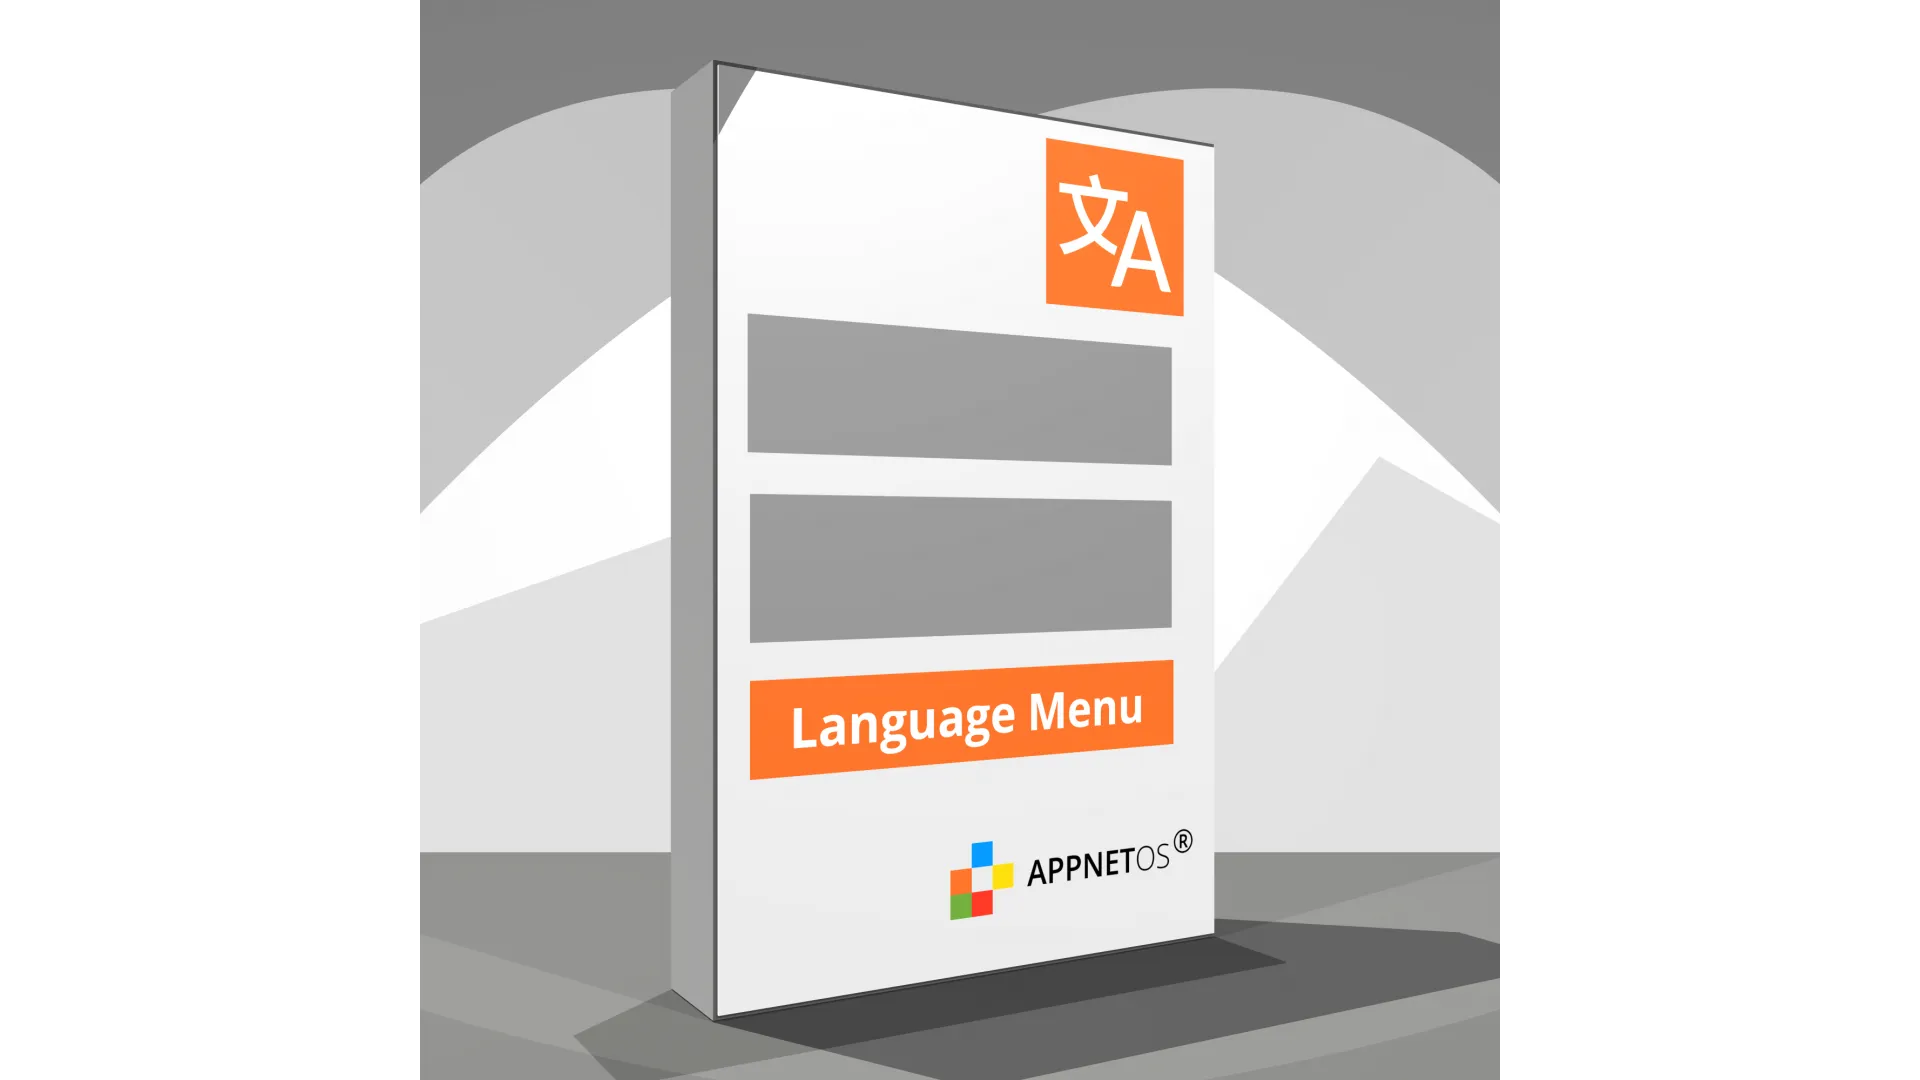 APPNET OS Language Menu